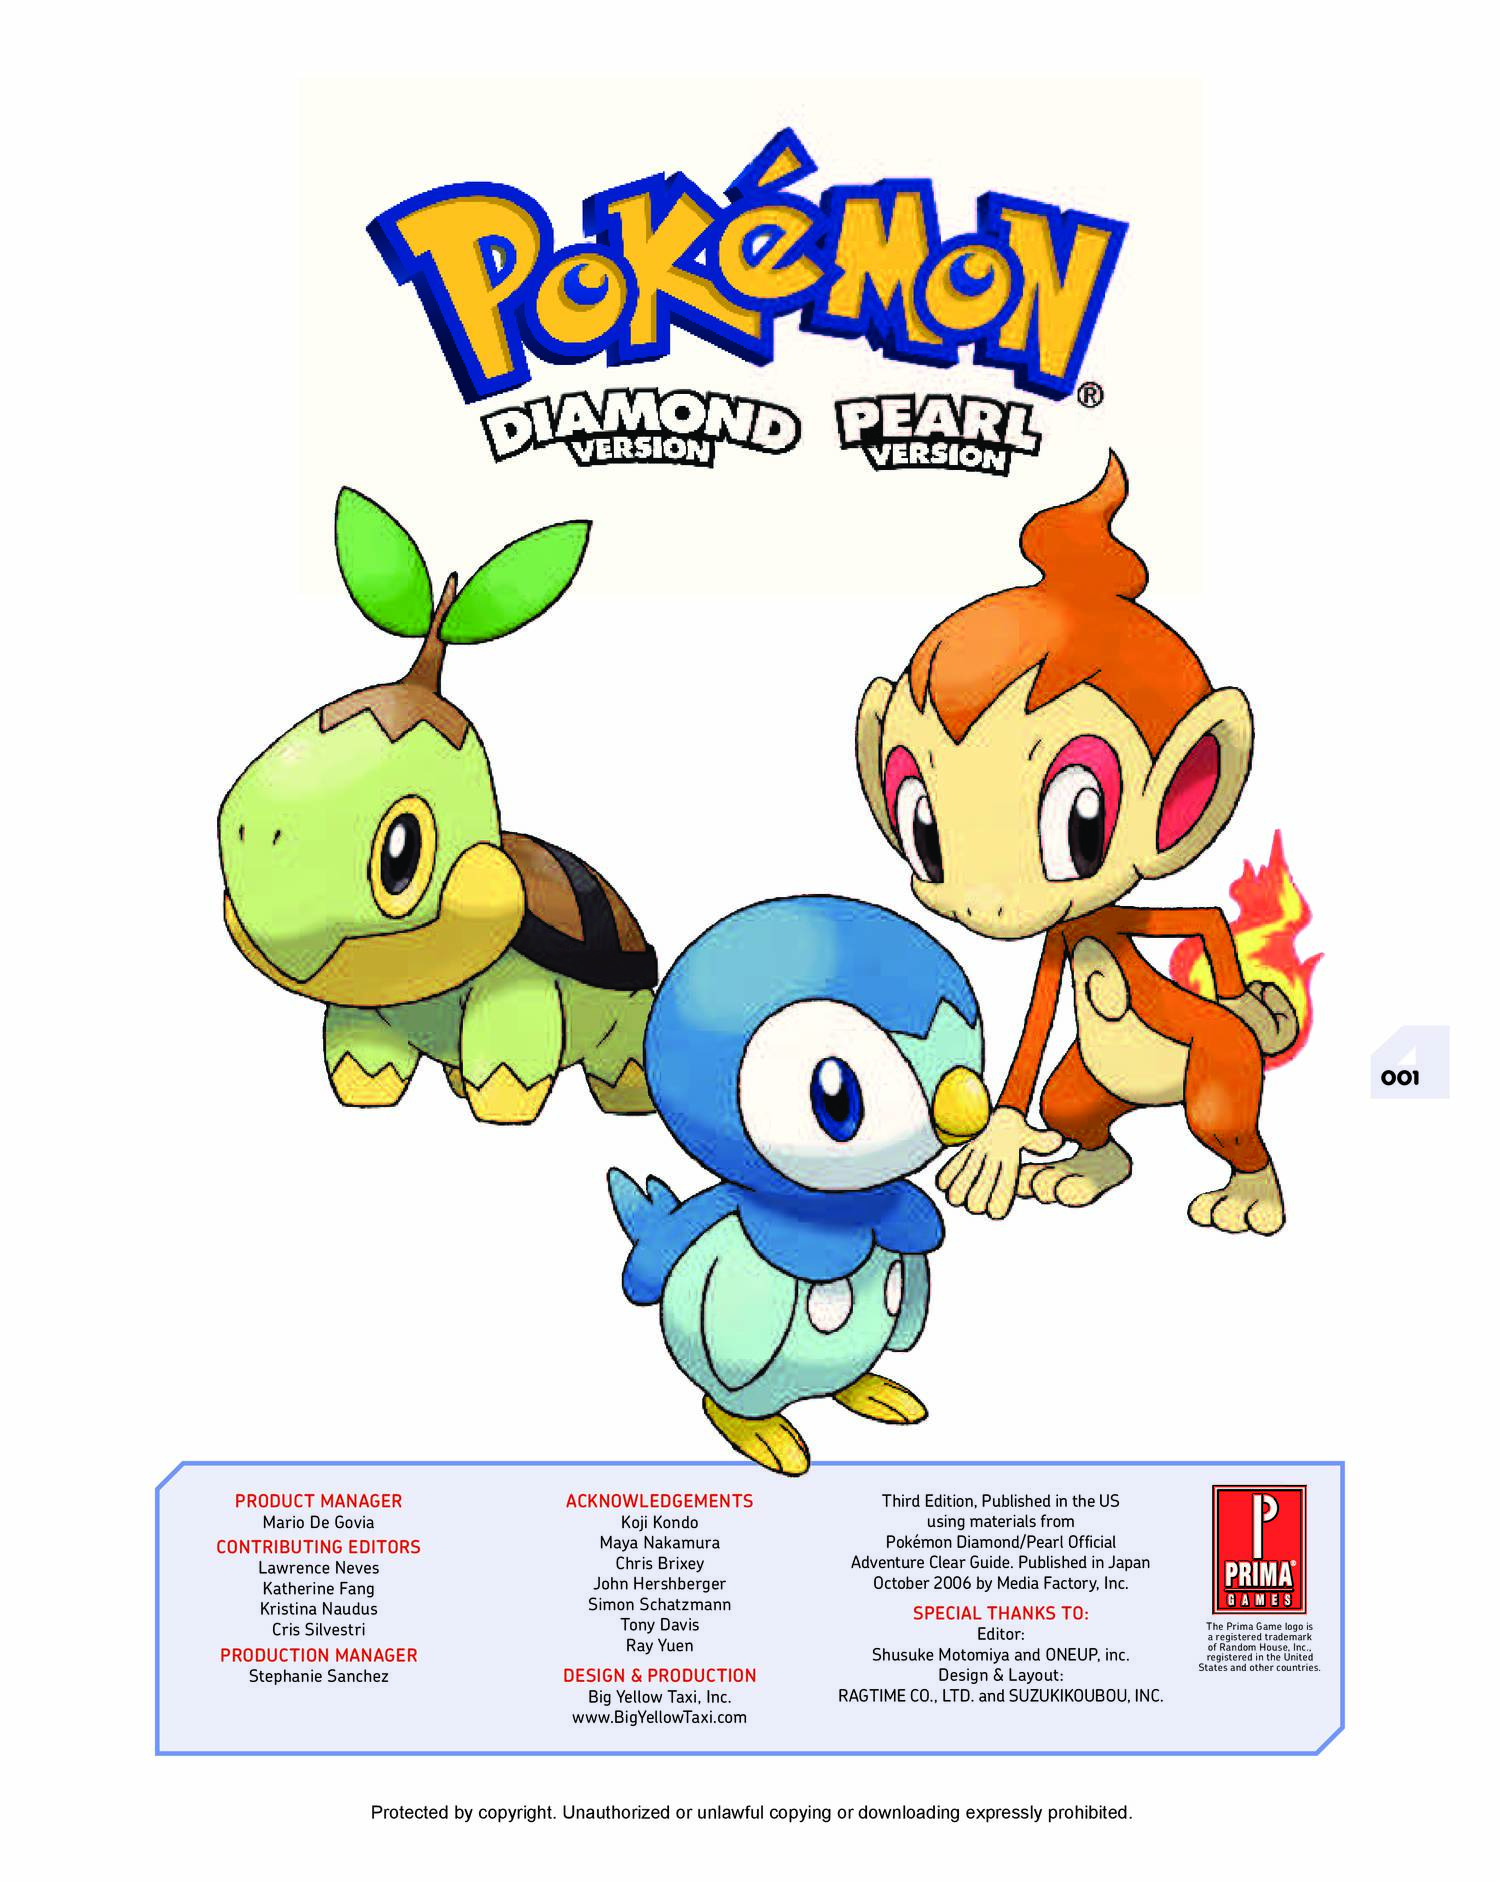 Pokémon Diamond e Pearl – Wikipédia, a enciclopédia livre